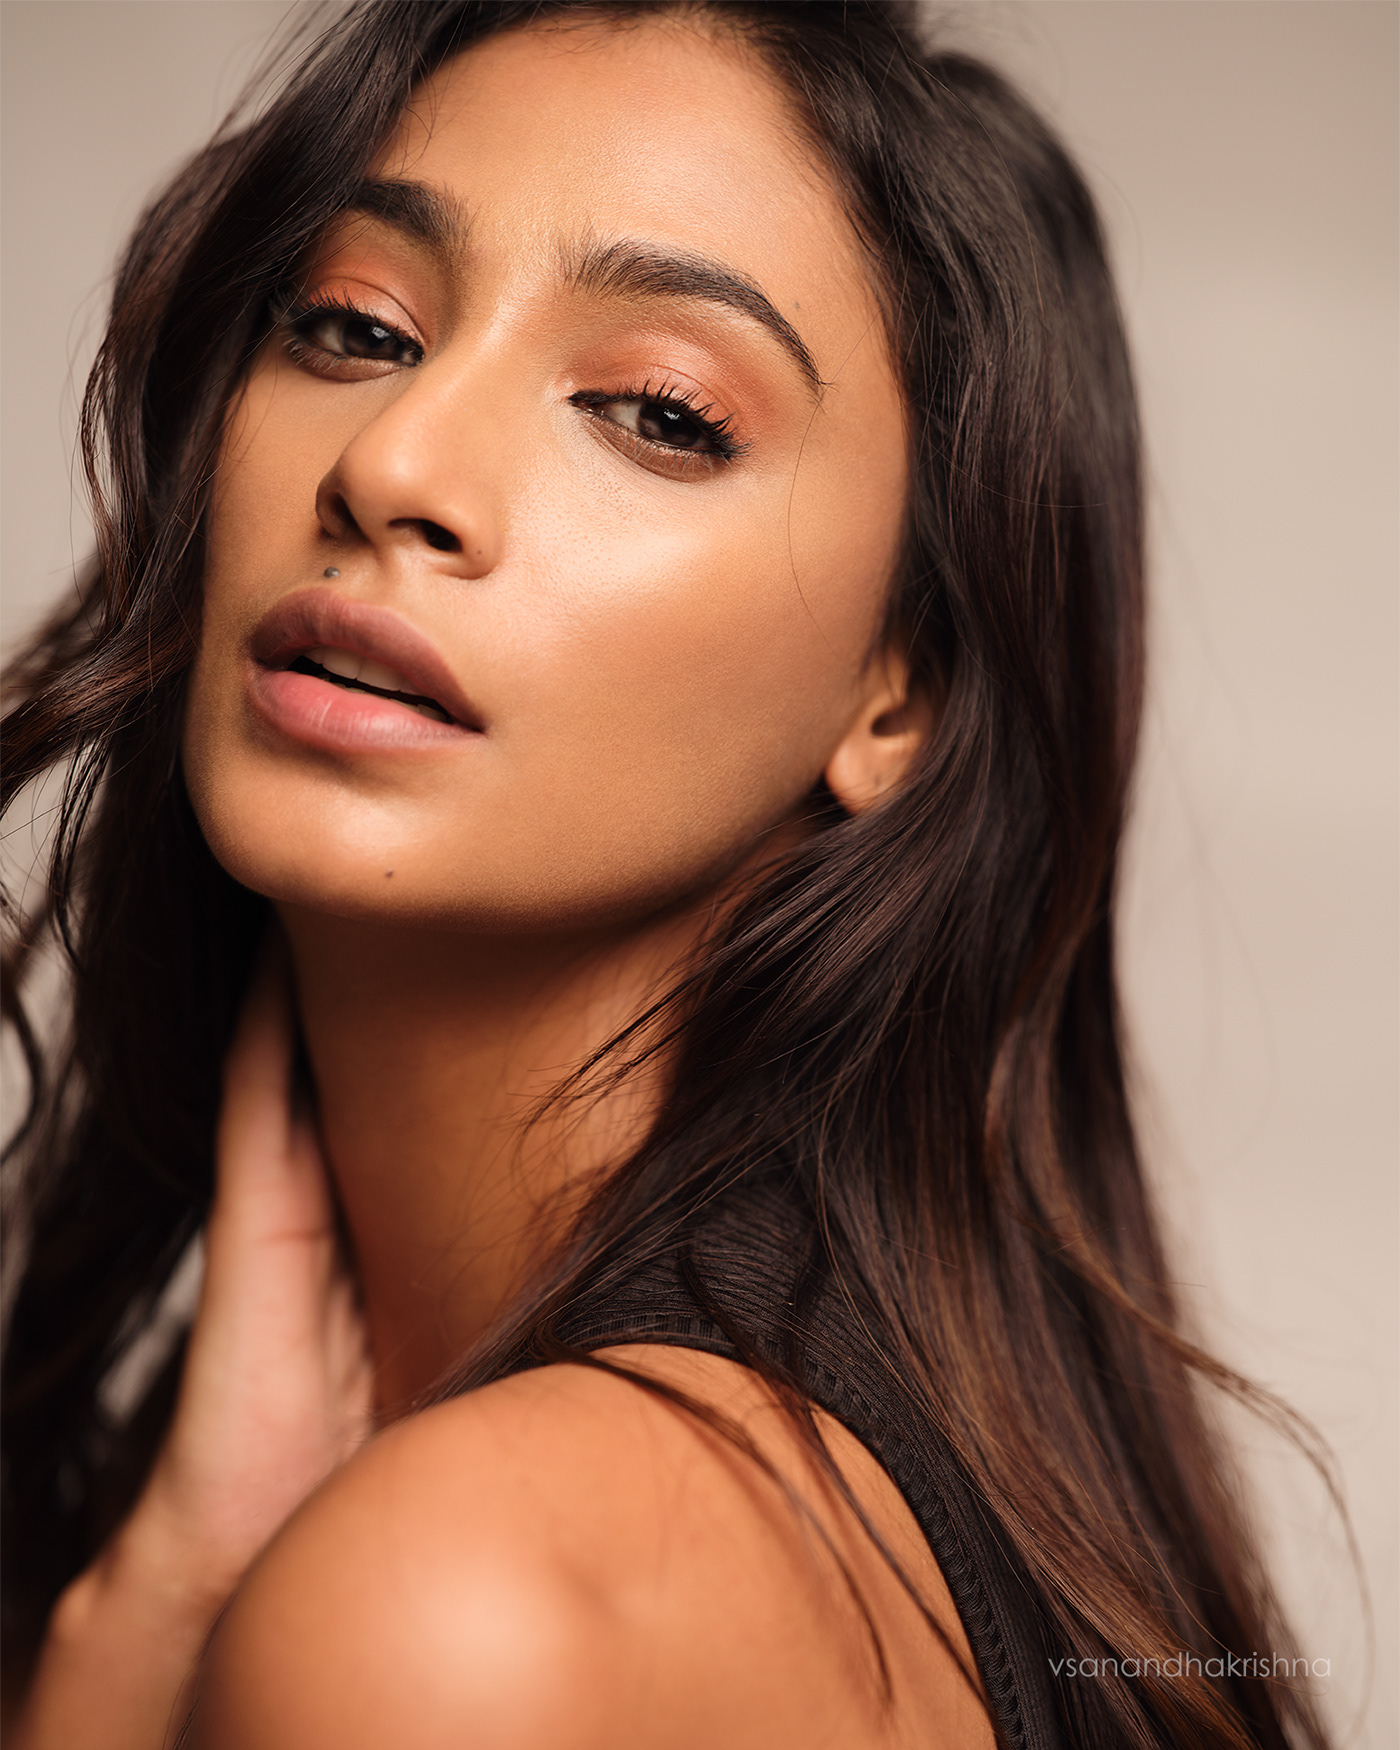 actress model miss india portrait